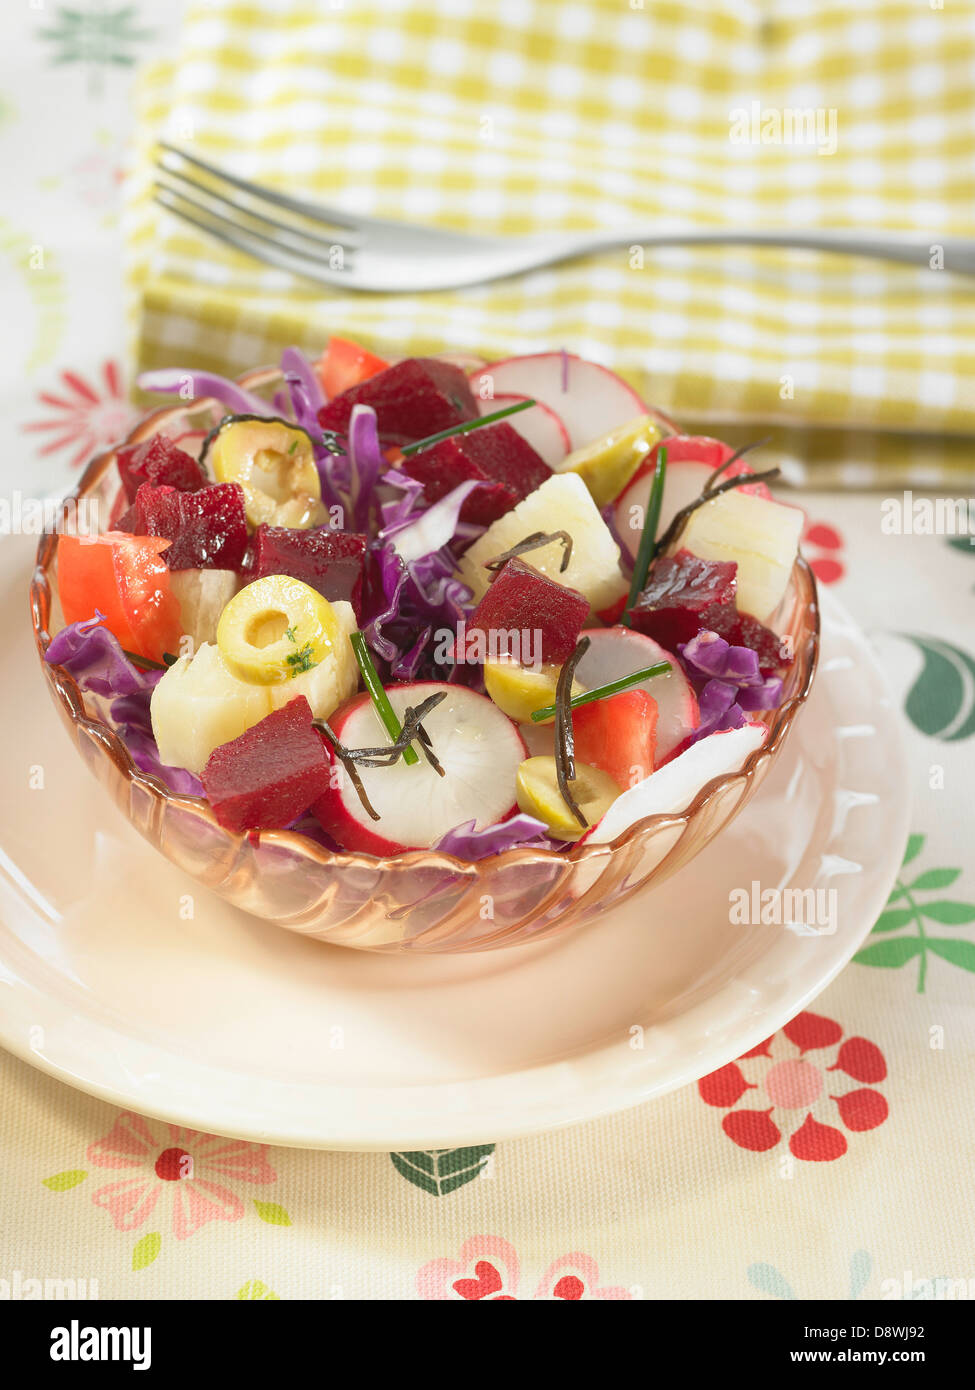 Rote Beete, Rettich, Rotkohl, Tomaten, Algen und Yuca Salat Stockfoto